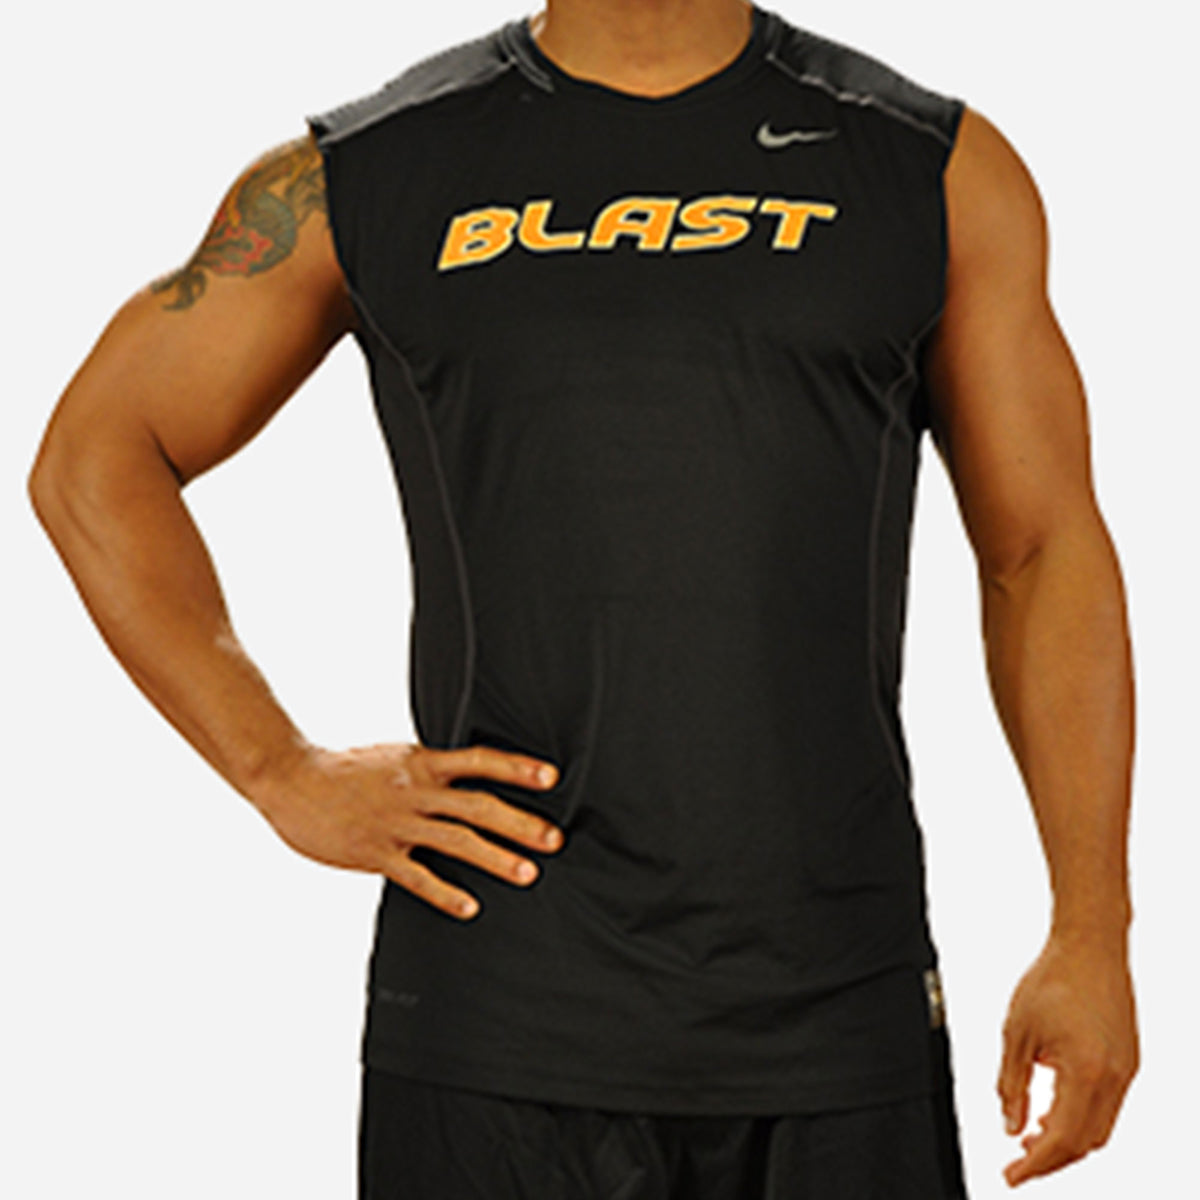 Nike Pro Tank Tops & Sleeveless Shirts.